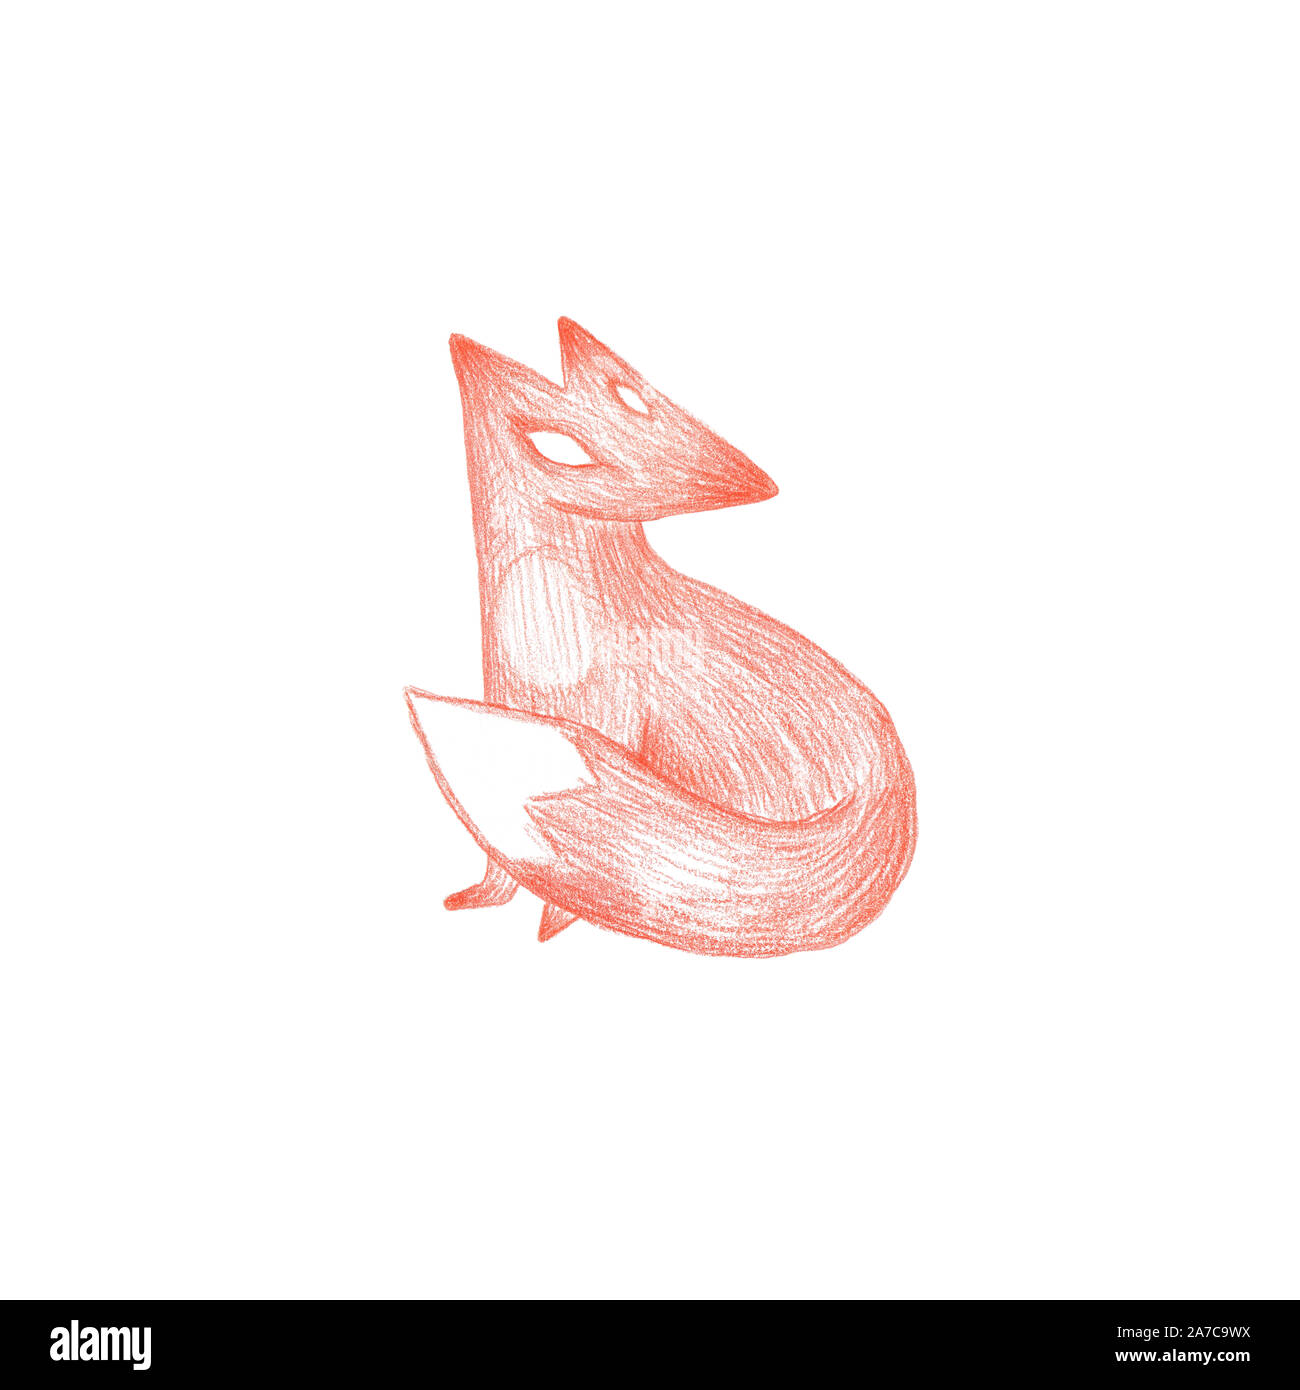 Red Fox Vulpes vulpes Dimensions  Drawings  Dimensionscom